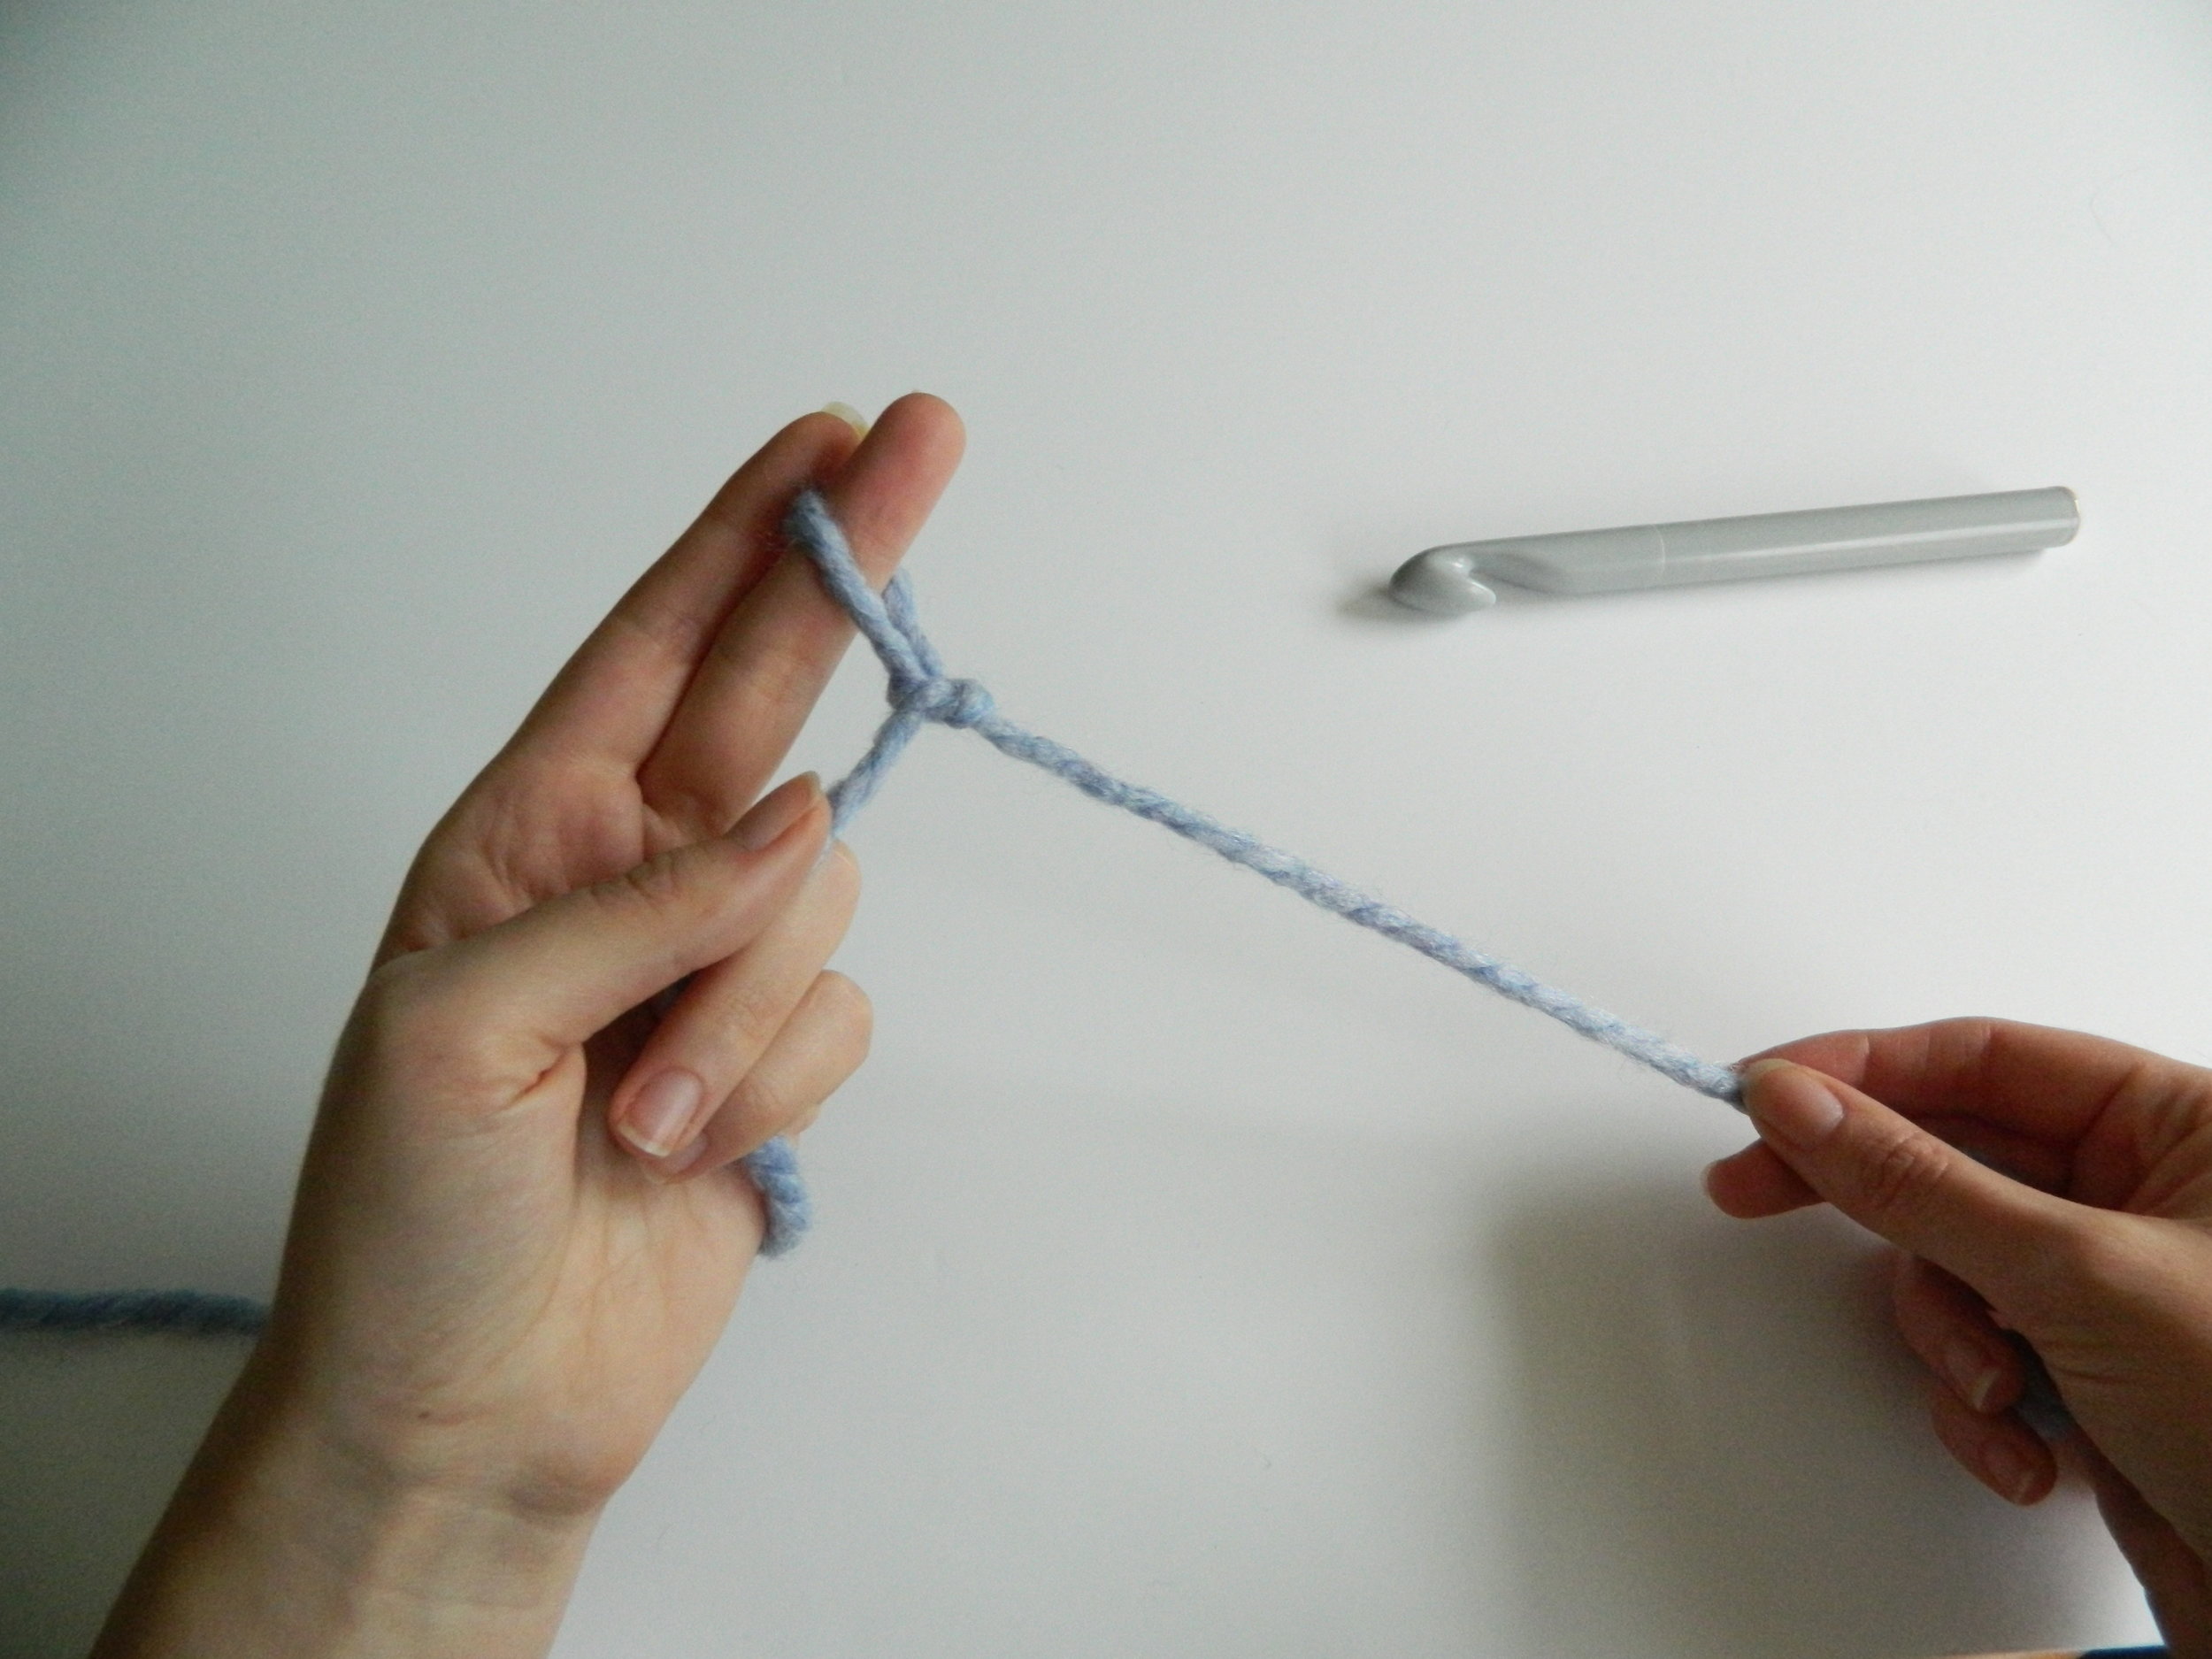 Super Chunky Crochet Throw Pattern Tutorial — Sarah Jane Seamstress